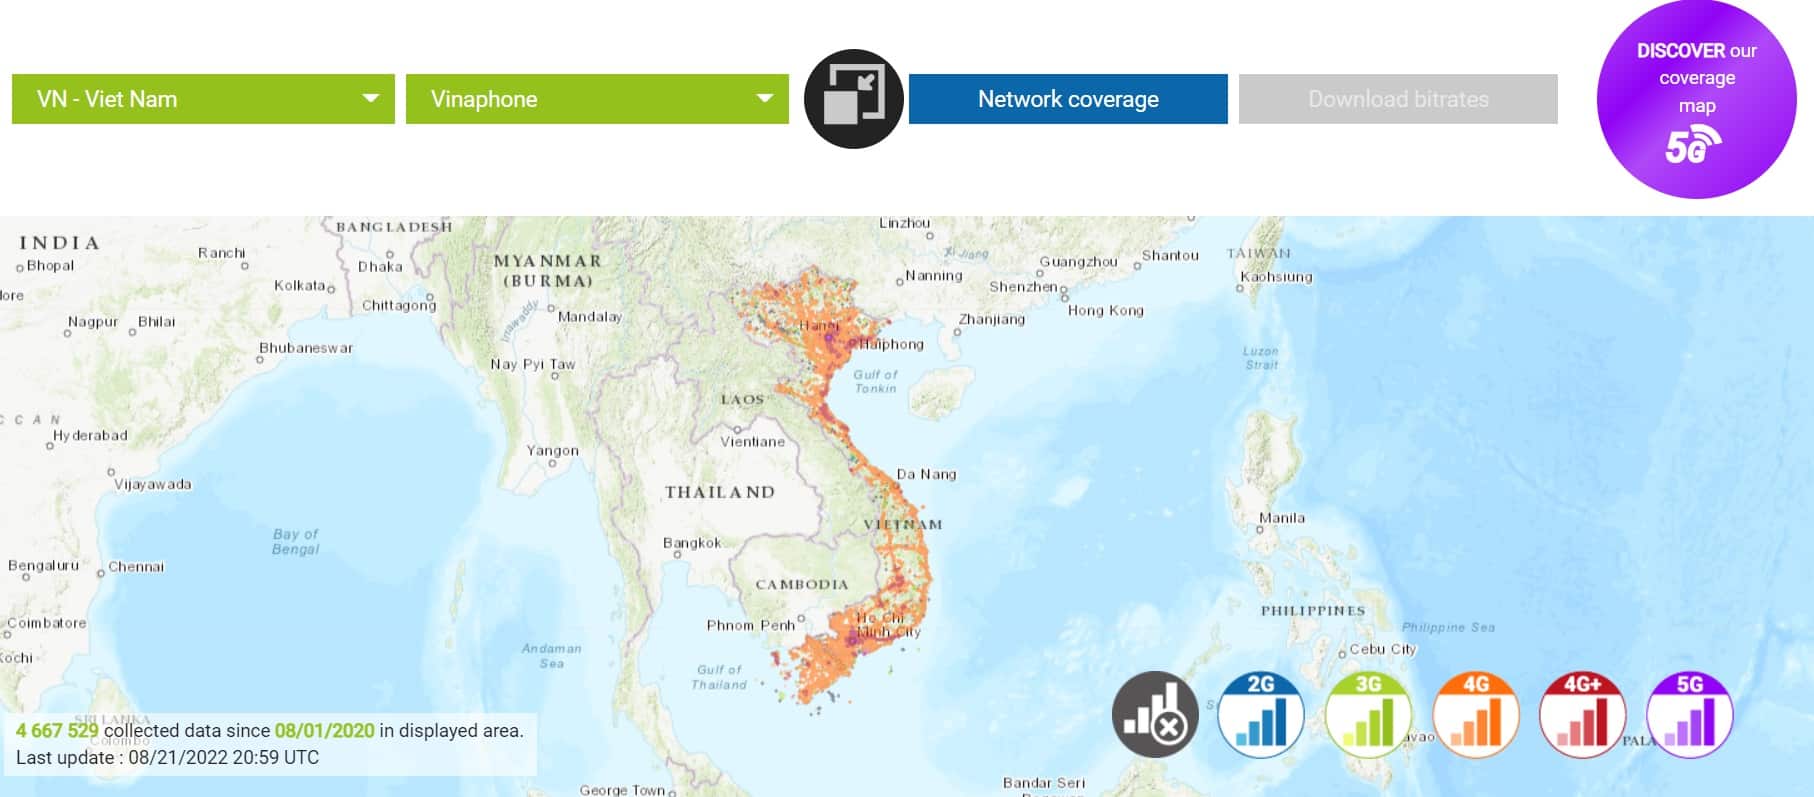 Vinaphone network coverage map - gigago